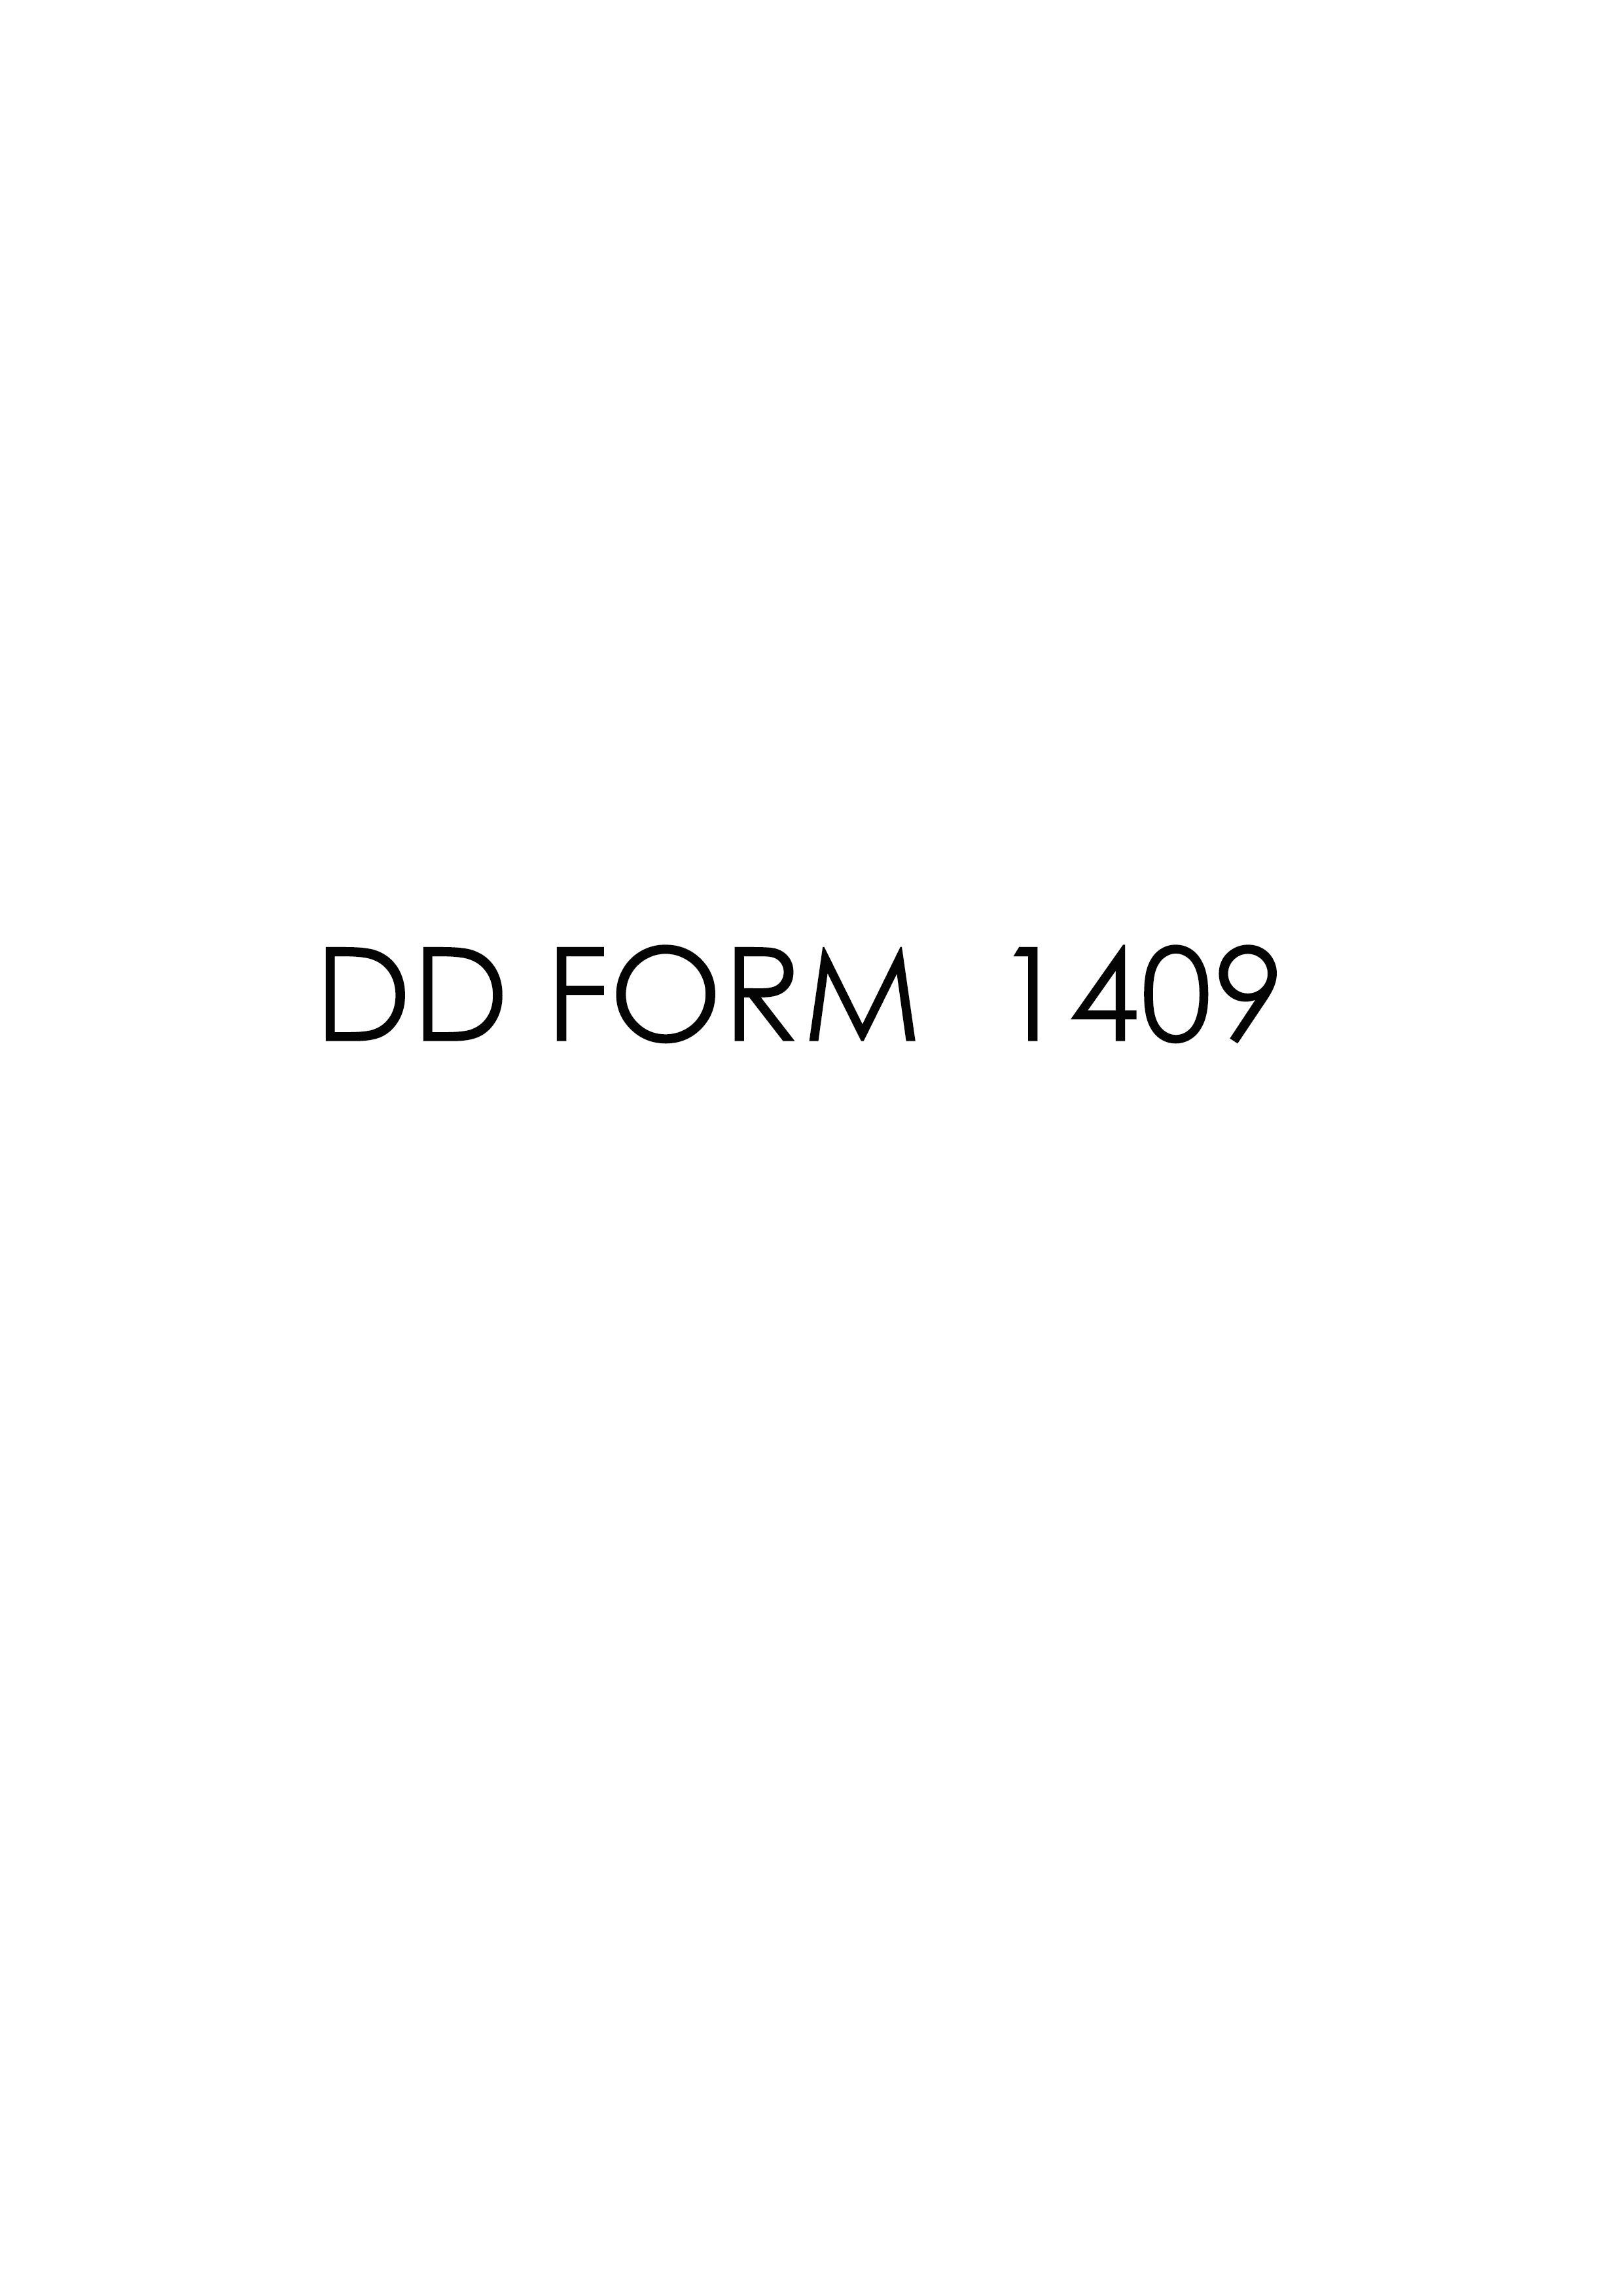 Download dd form 1409